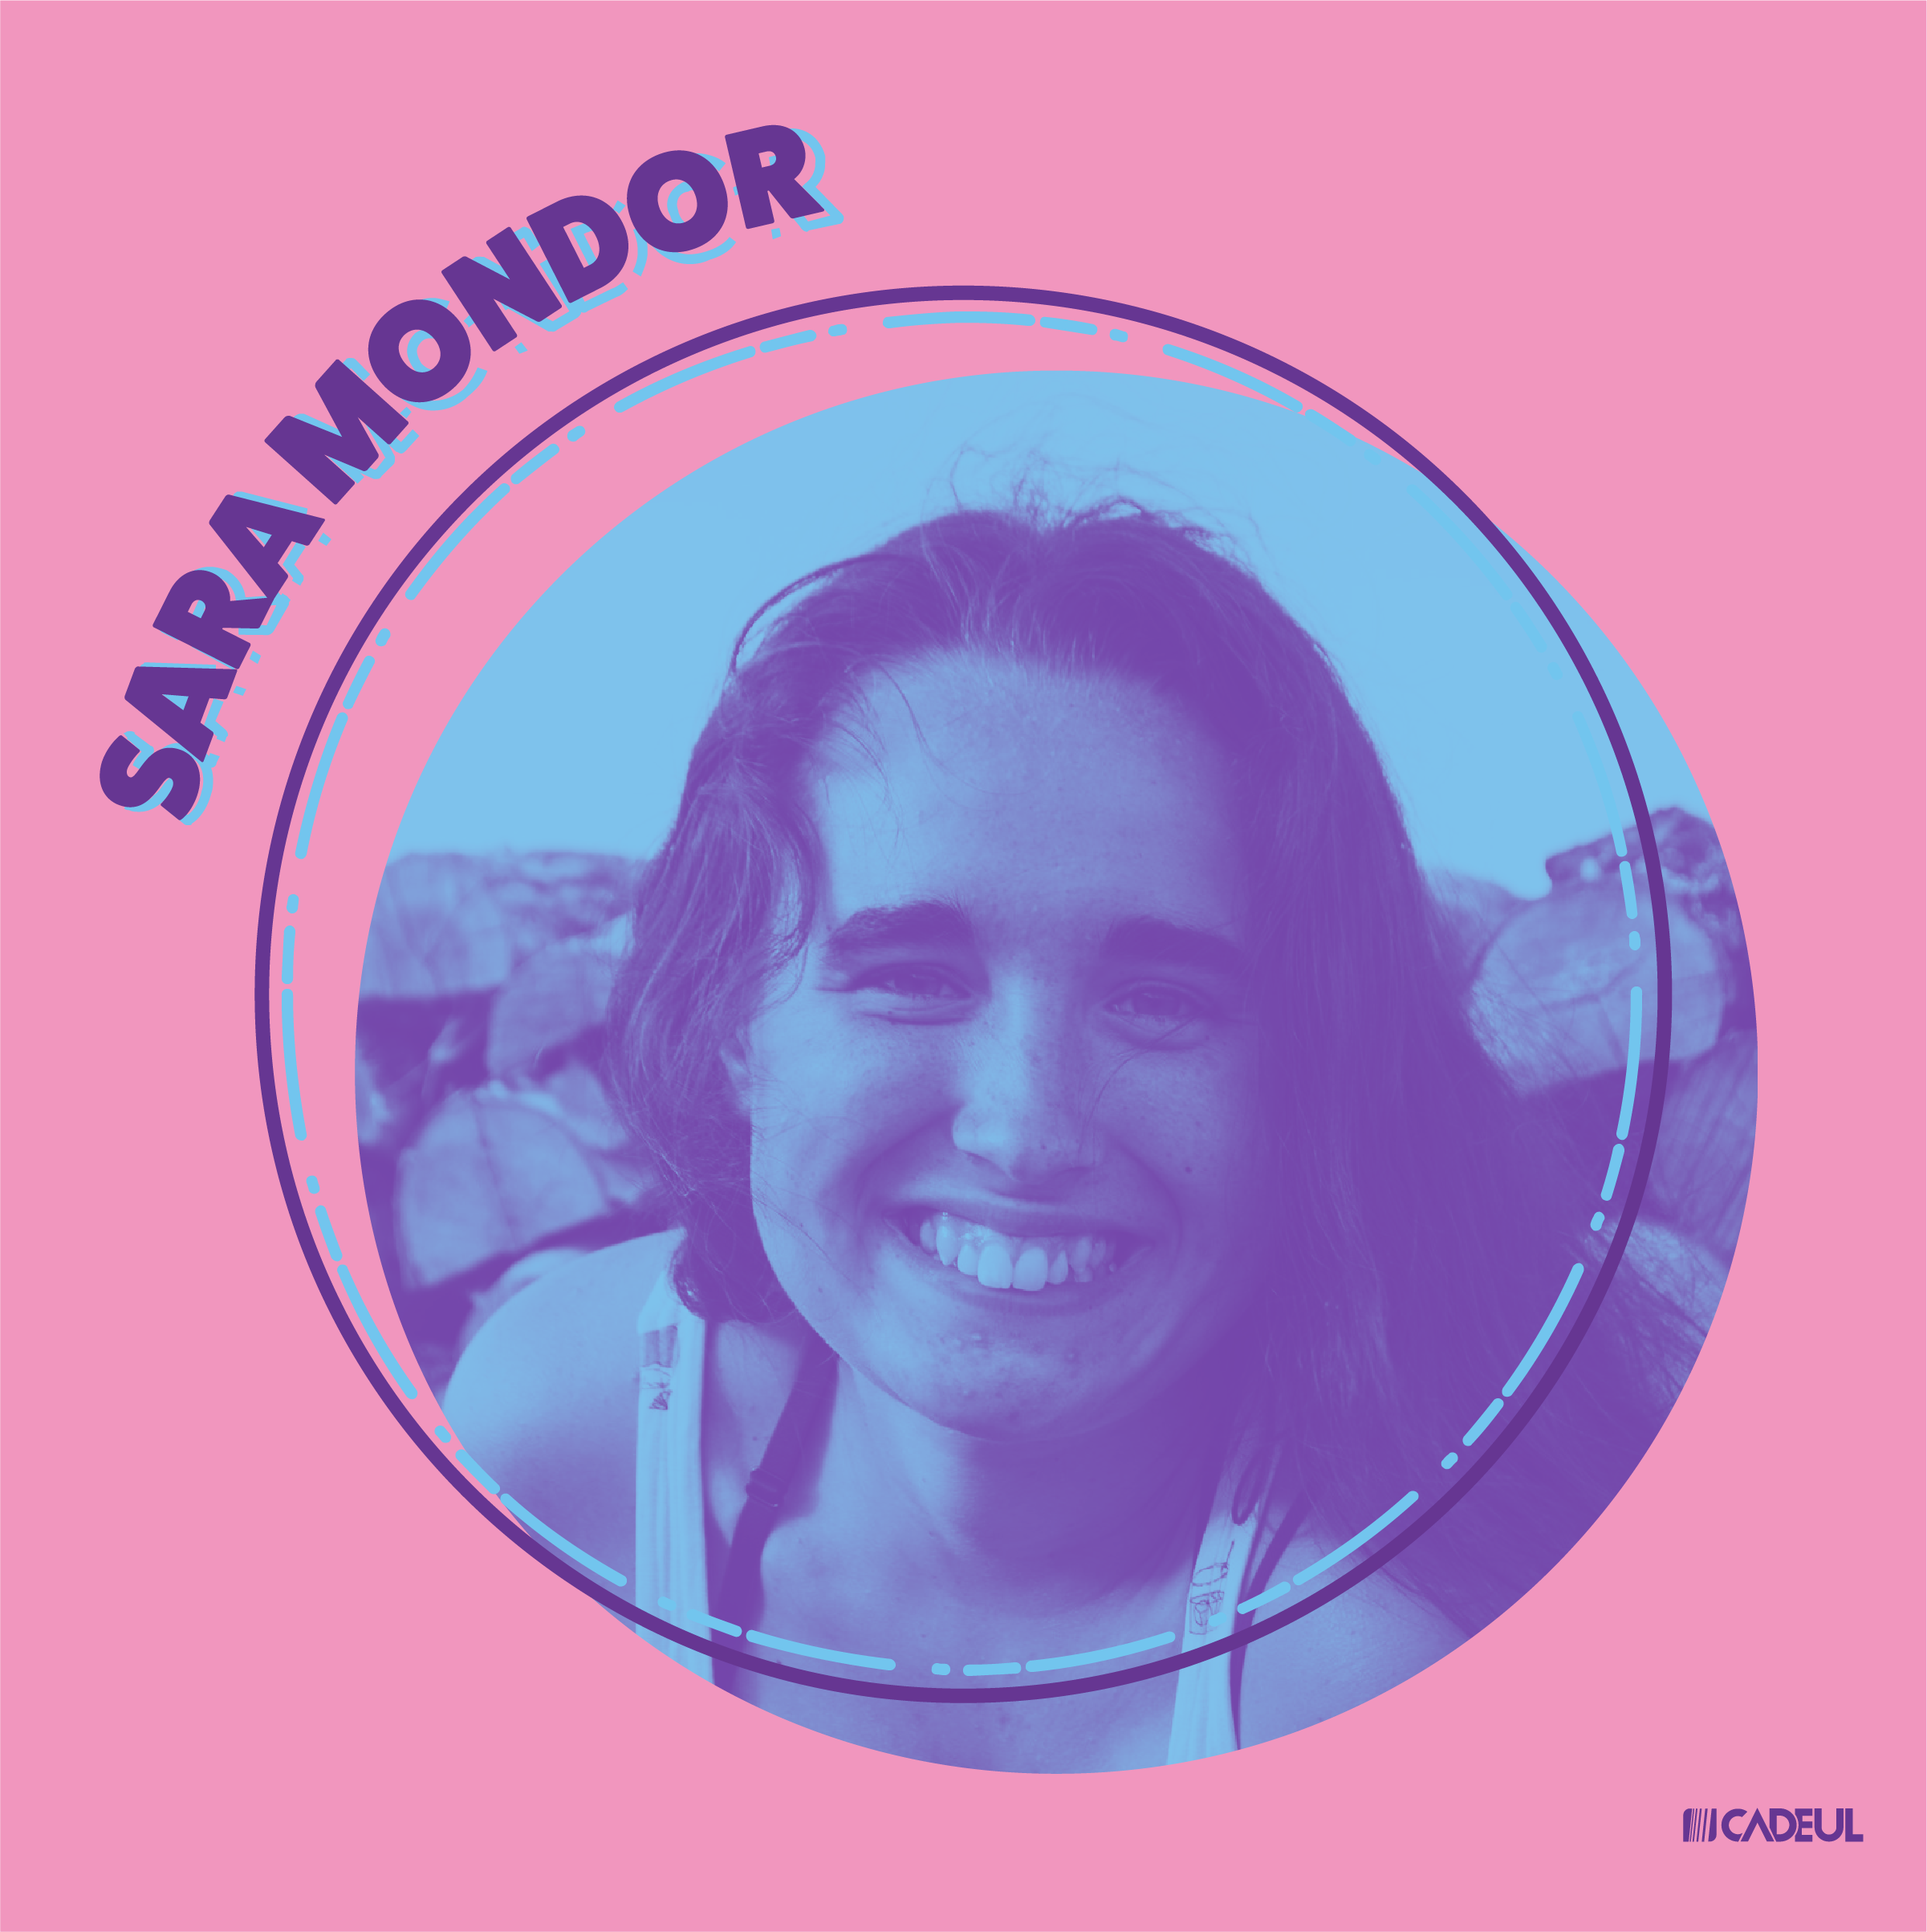 Sara Mondor